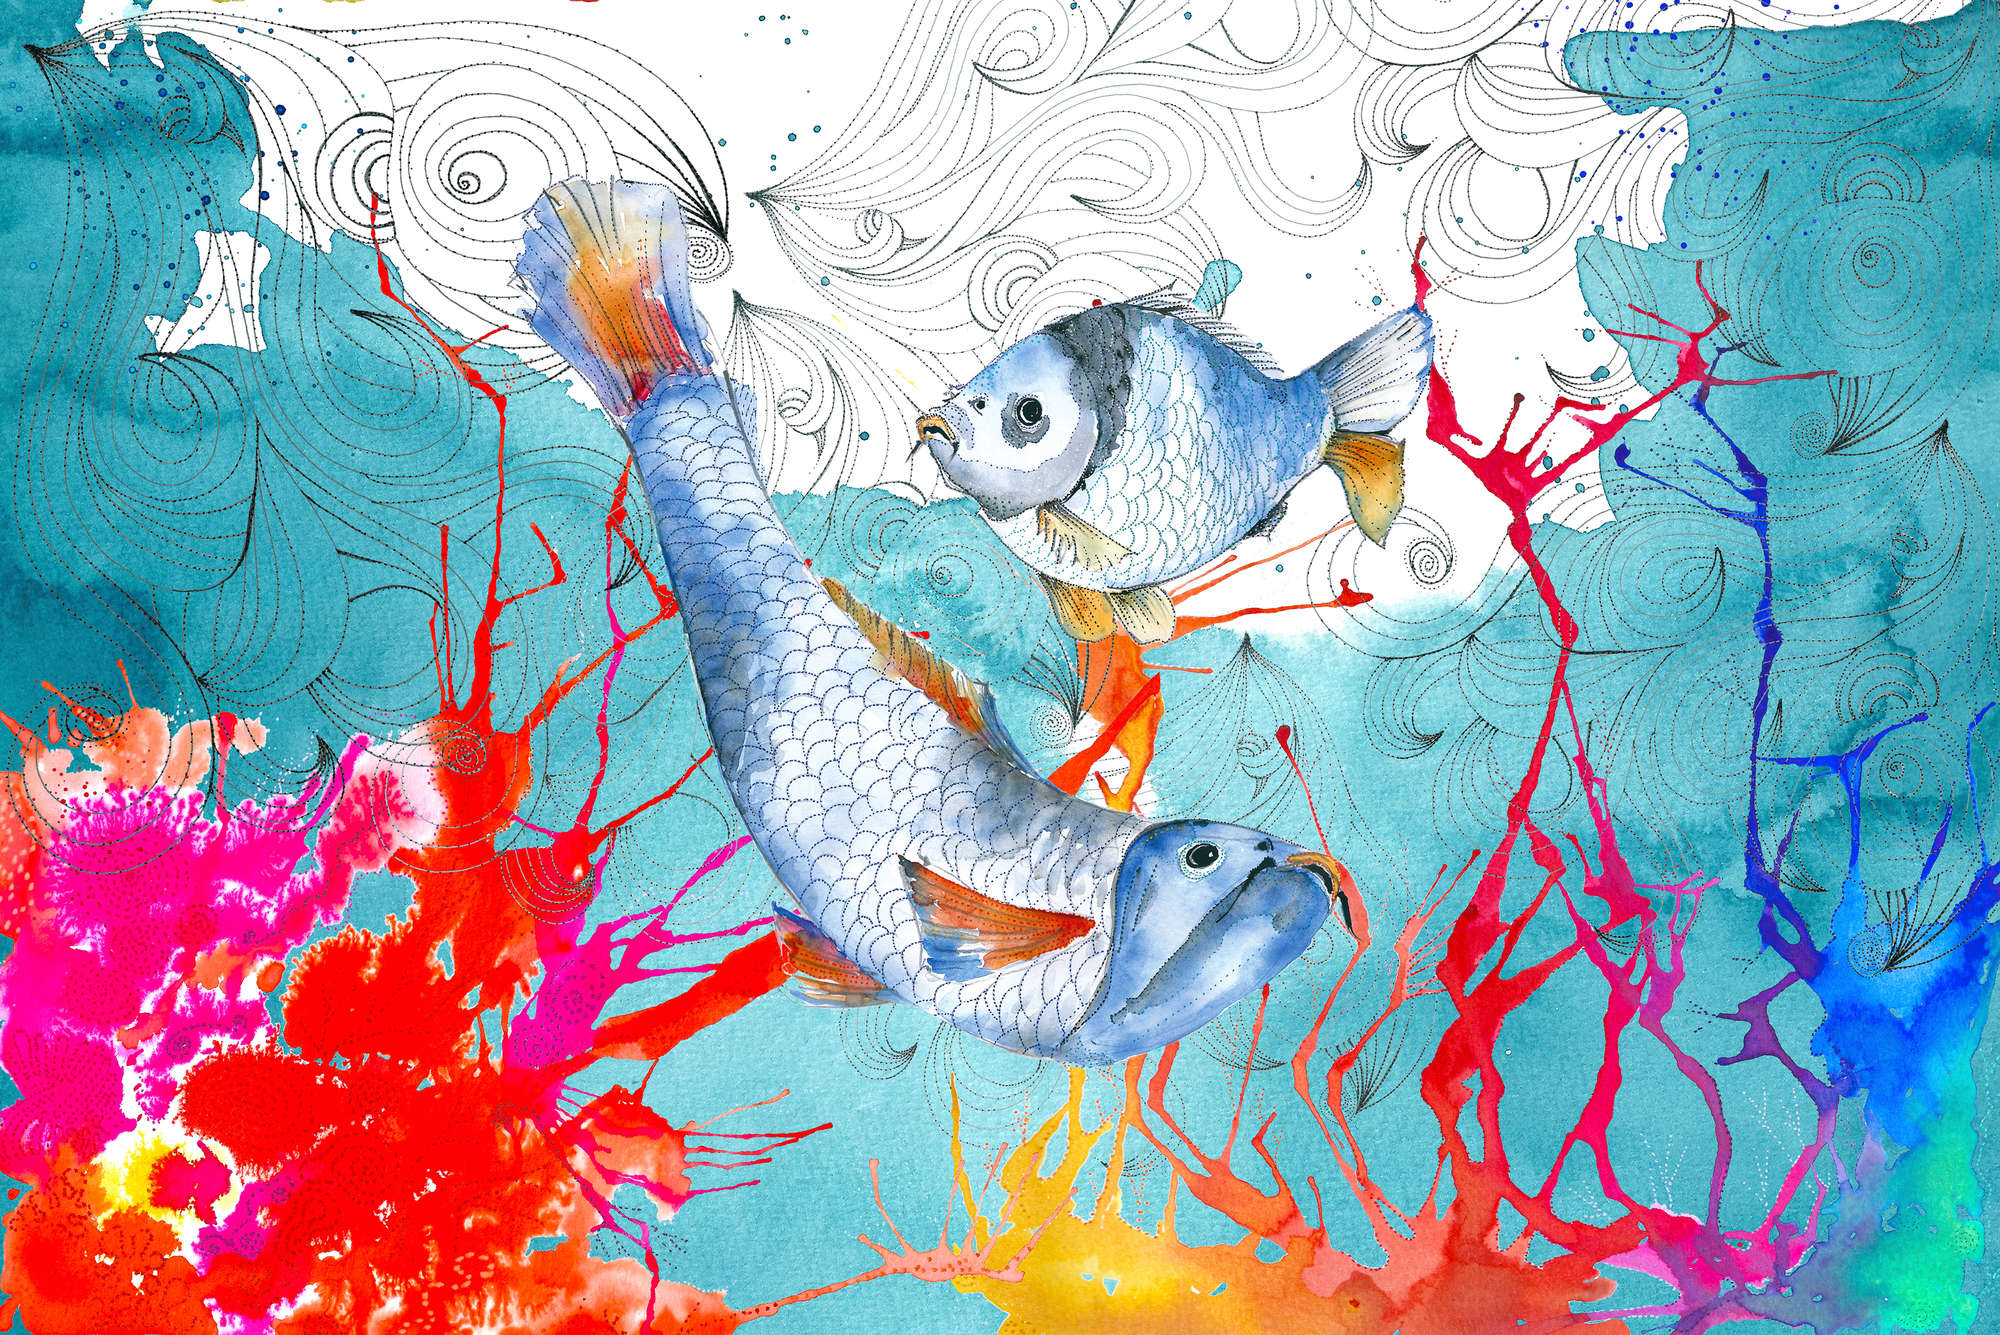             Aquarell Fototapete Fisch Motiv in Blau und Rosa auf Perlmutt Glattvlies
        